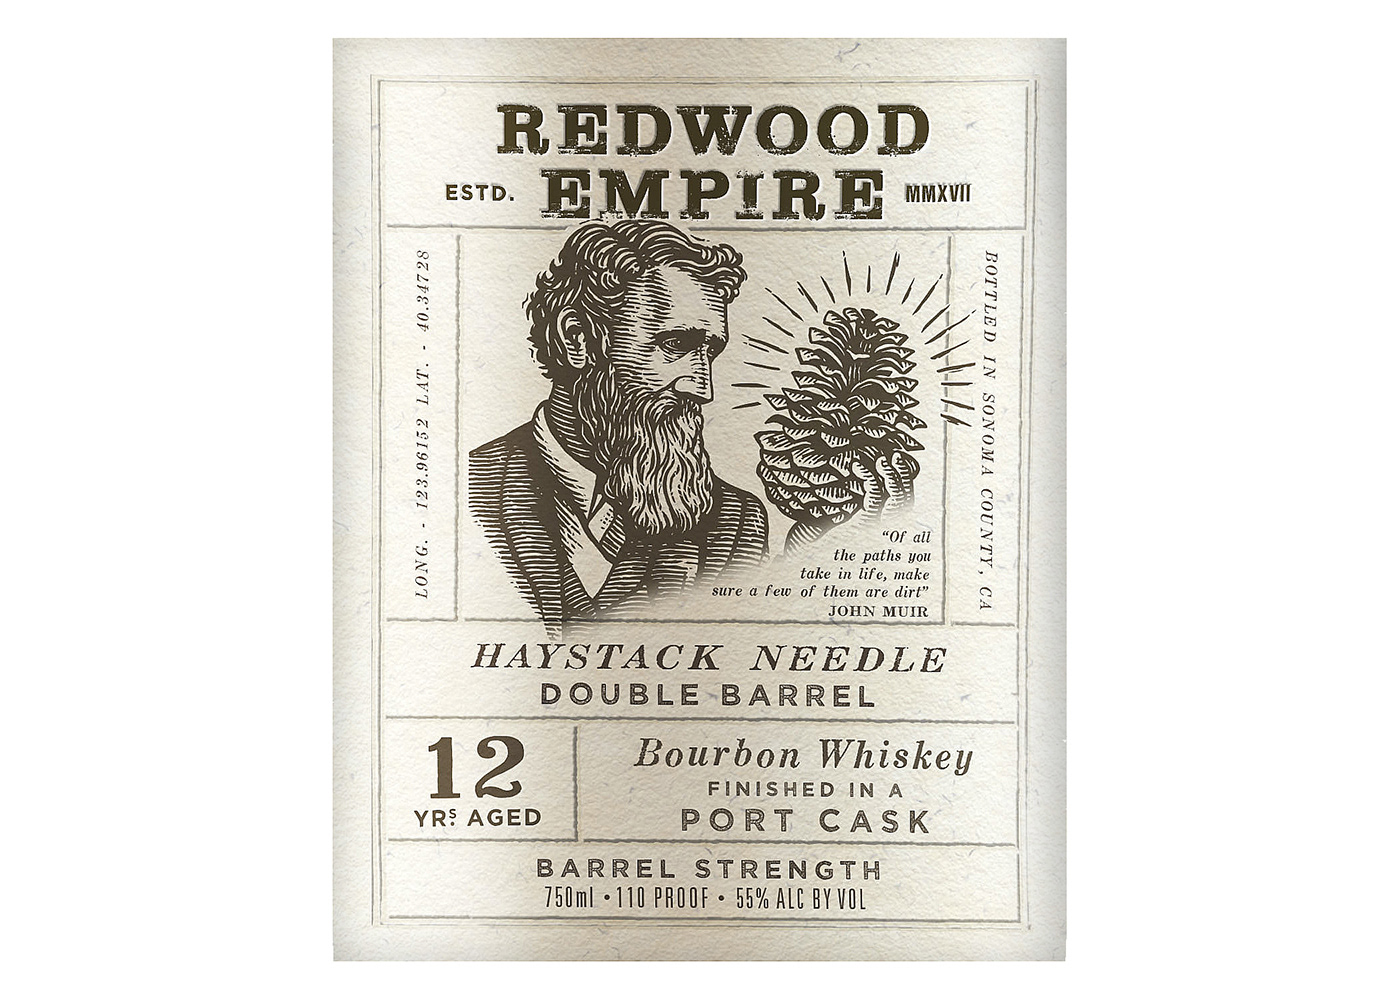 Redwood Empire Haystack Needle Work Showcase Steven Noble, Directory of illustration